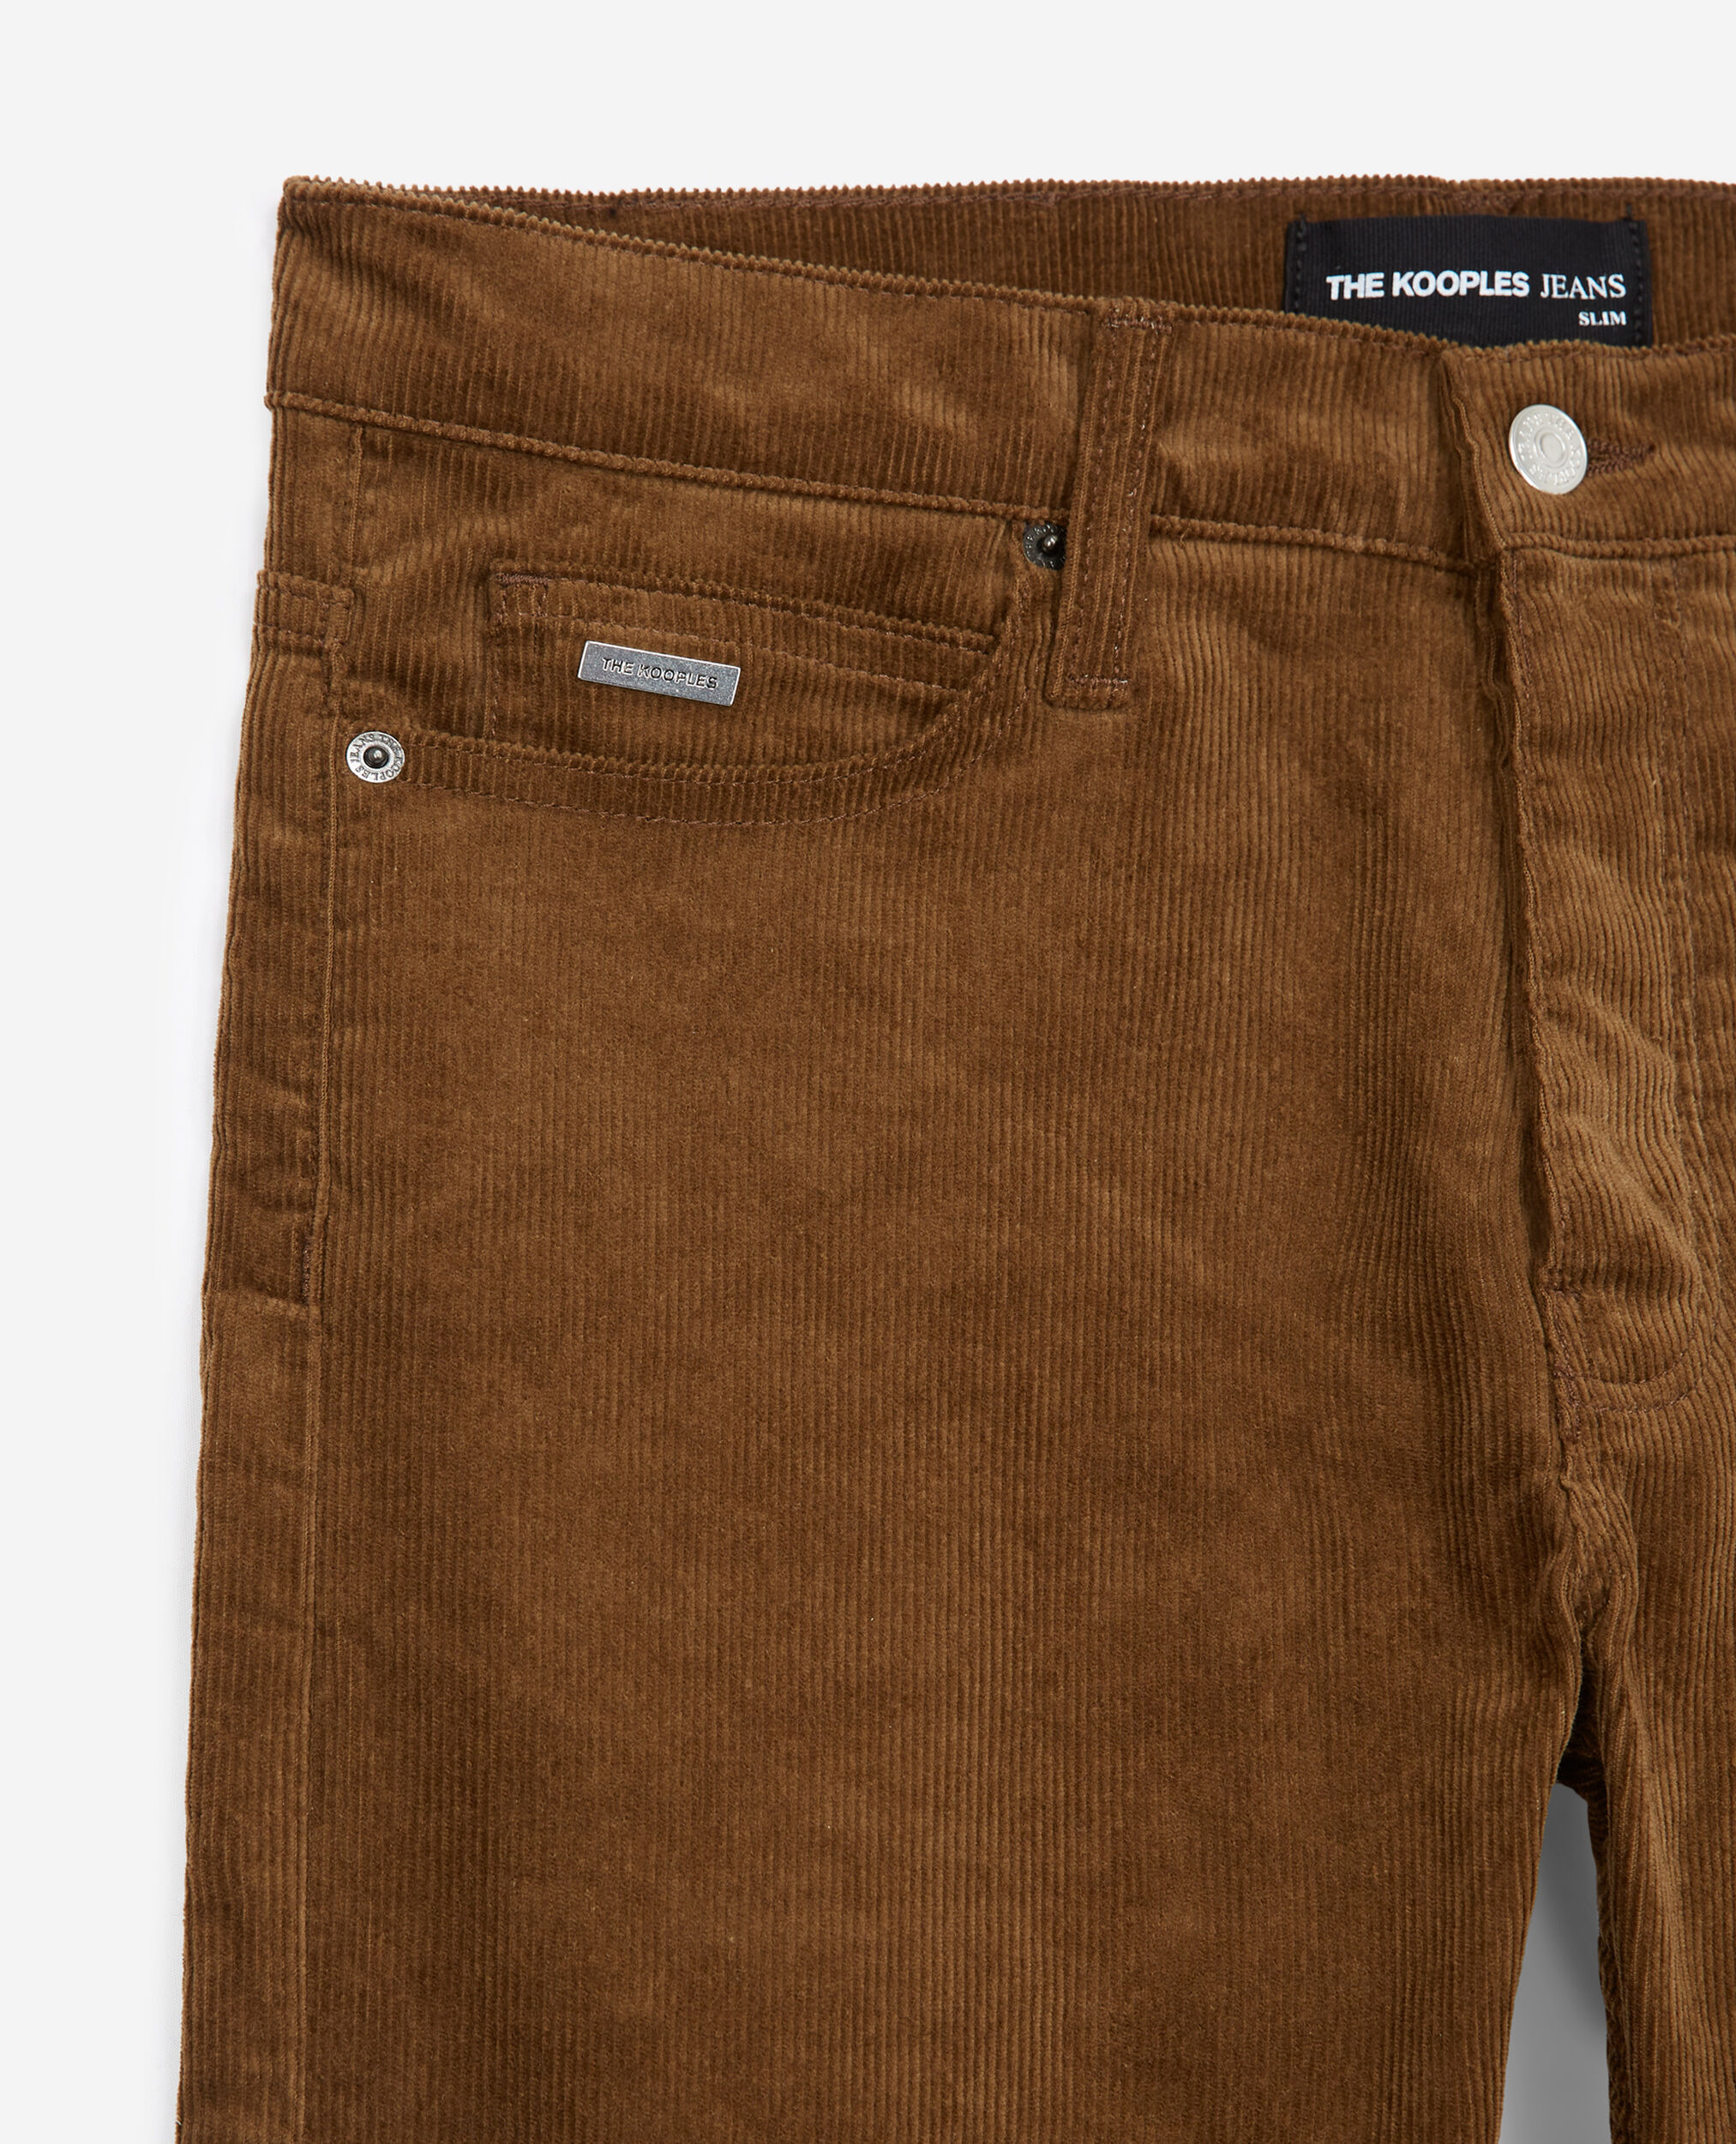 Ribbed brown velvet jeans, TABACCO, hi-res image number null